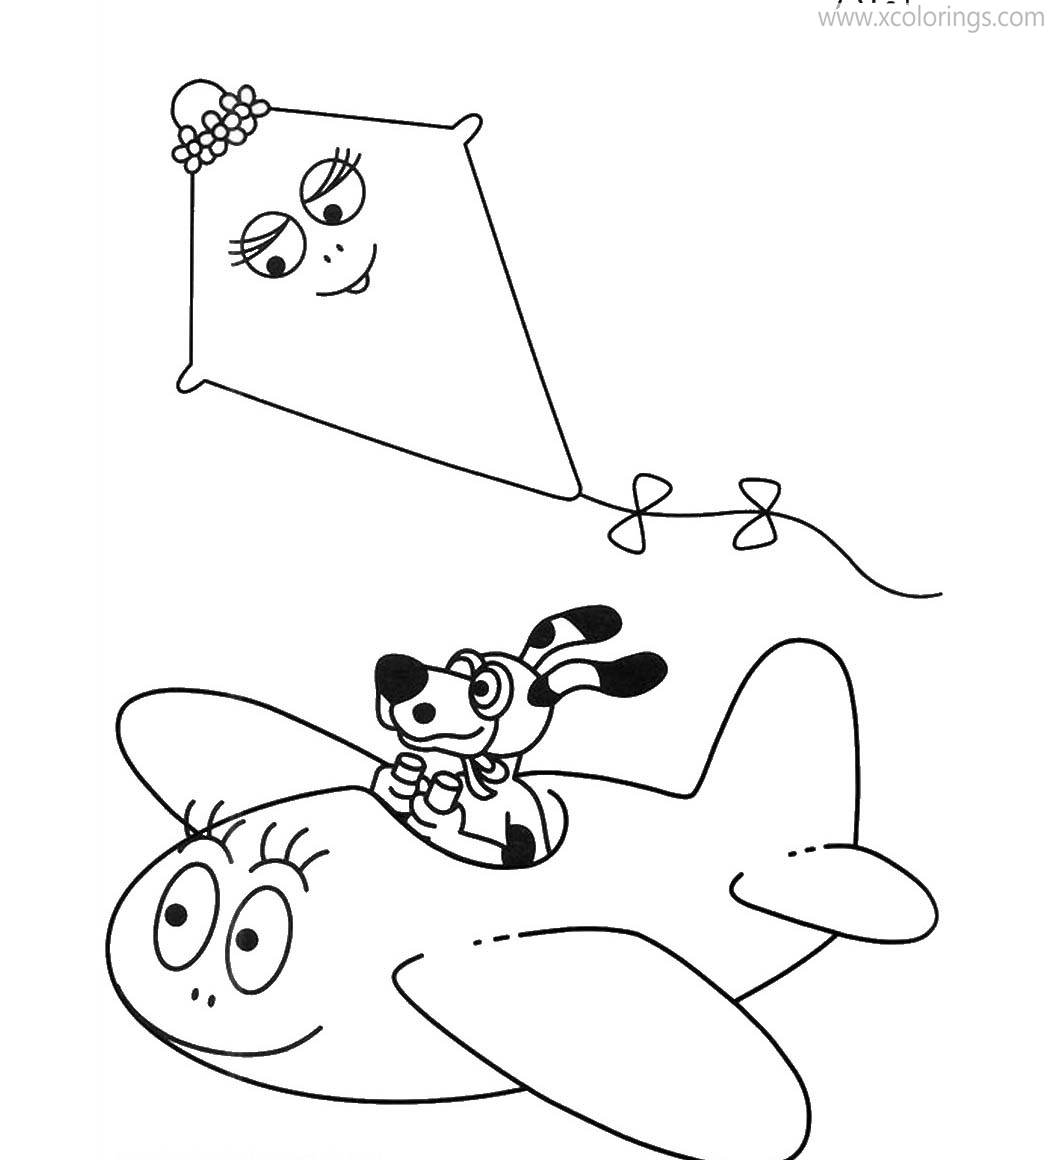 Free Barbapapa Coloring Pages Kite and Plane printable